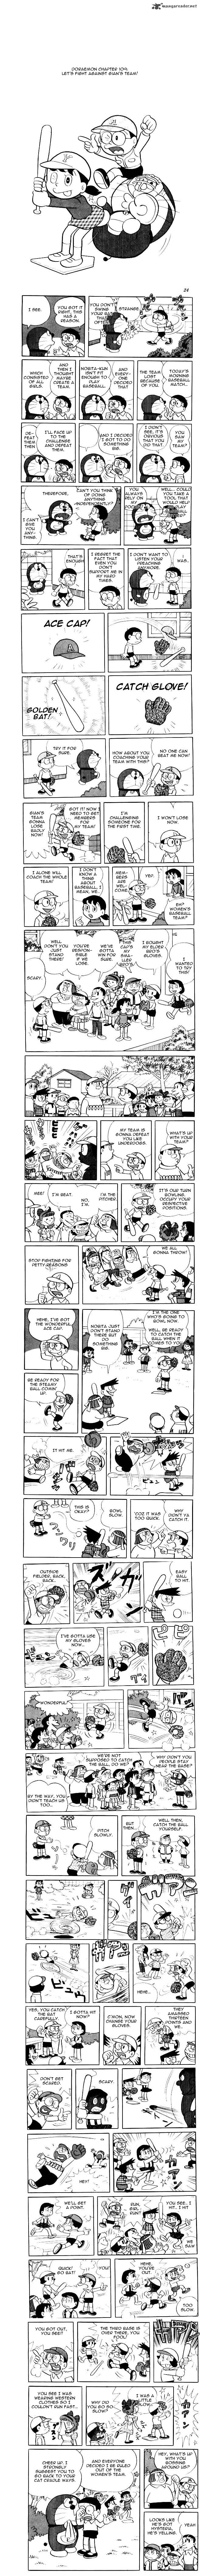 Doraemon Chapter 109 Page 1